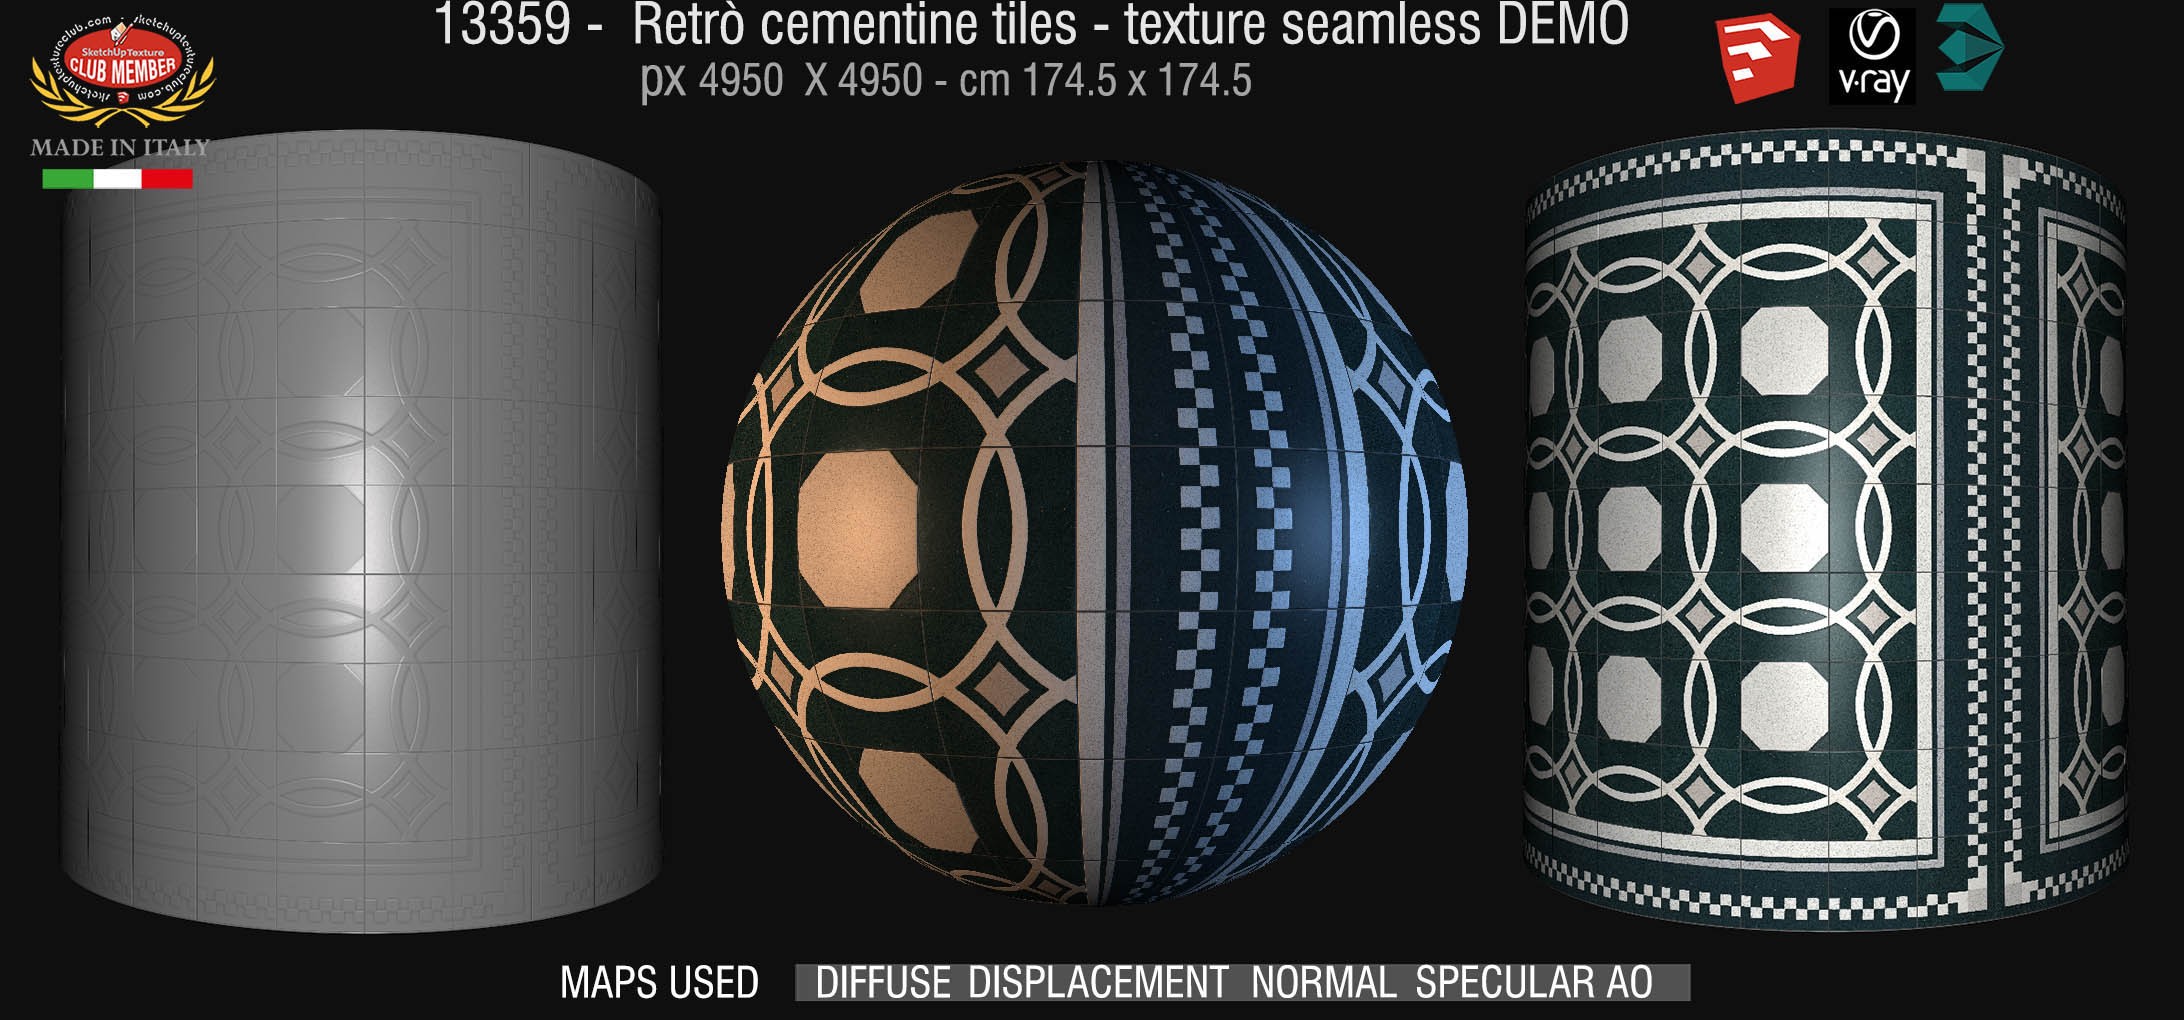 13359 retrò cementine tiles - texture seamless + maps DEMO